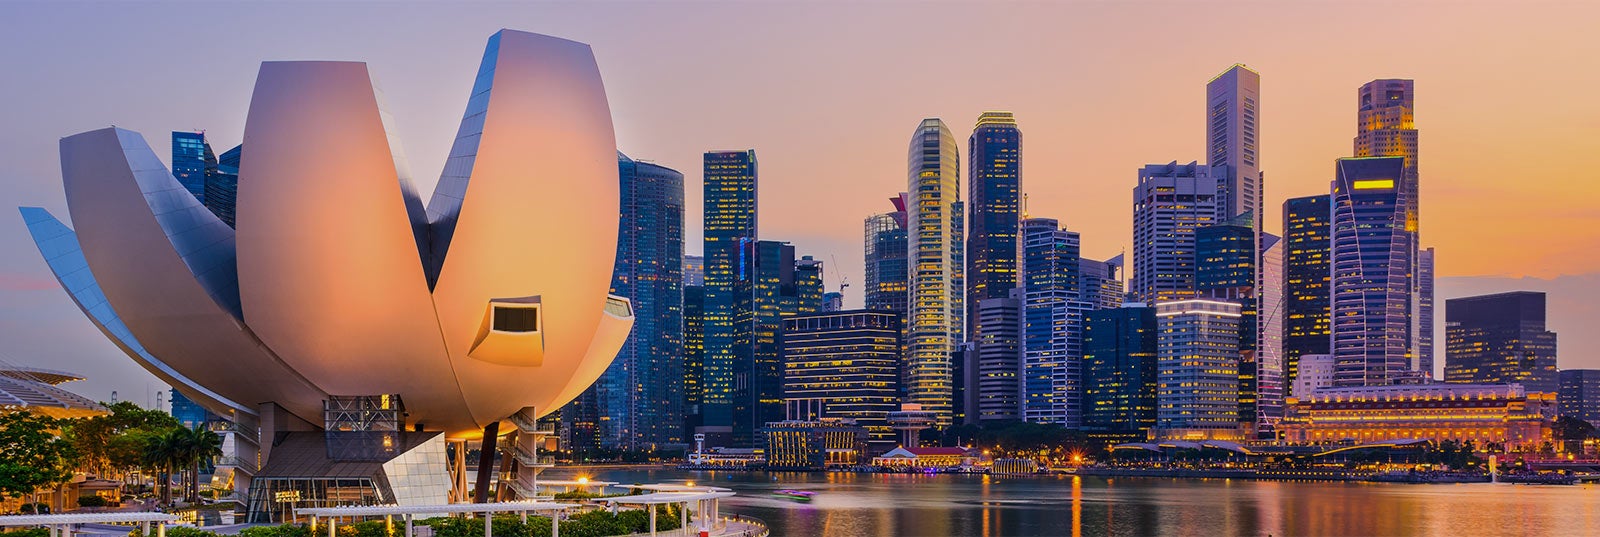 lugares para ir a citas en Singapur